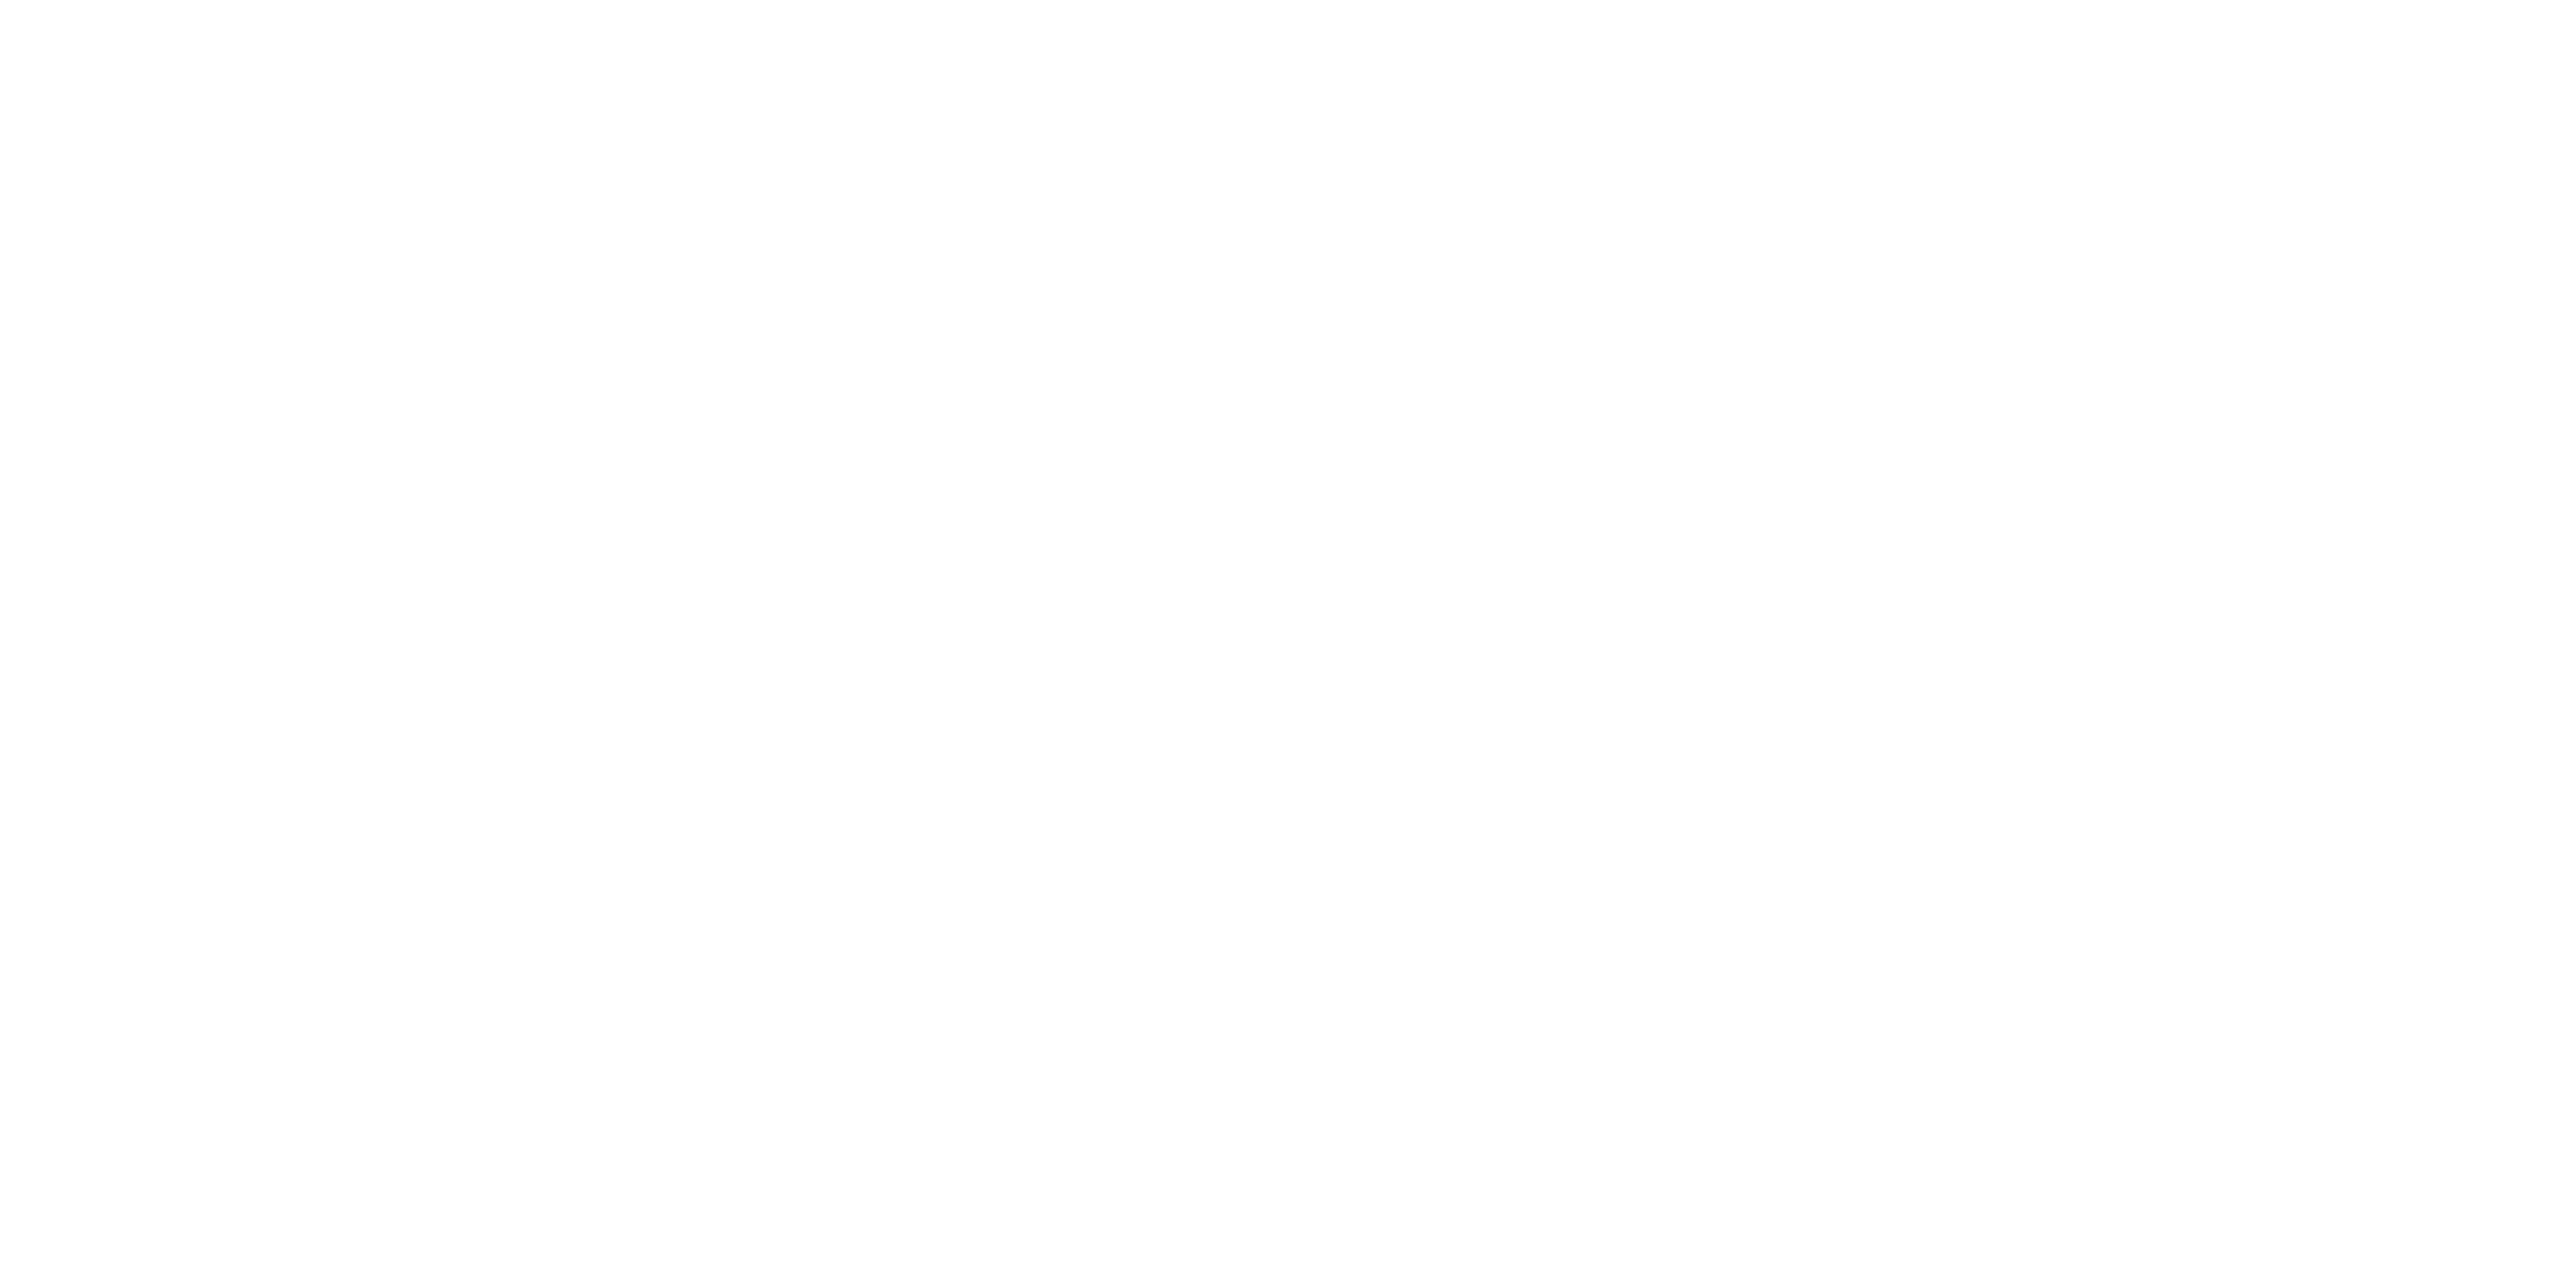 Roof Solutions & Construction El Paso, TX